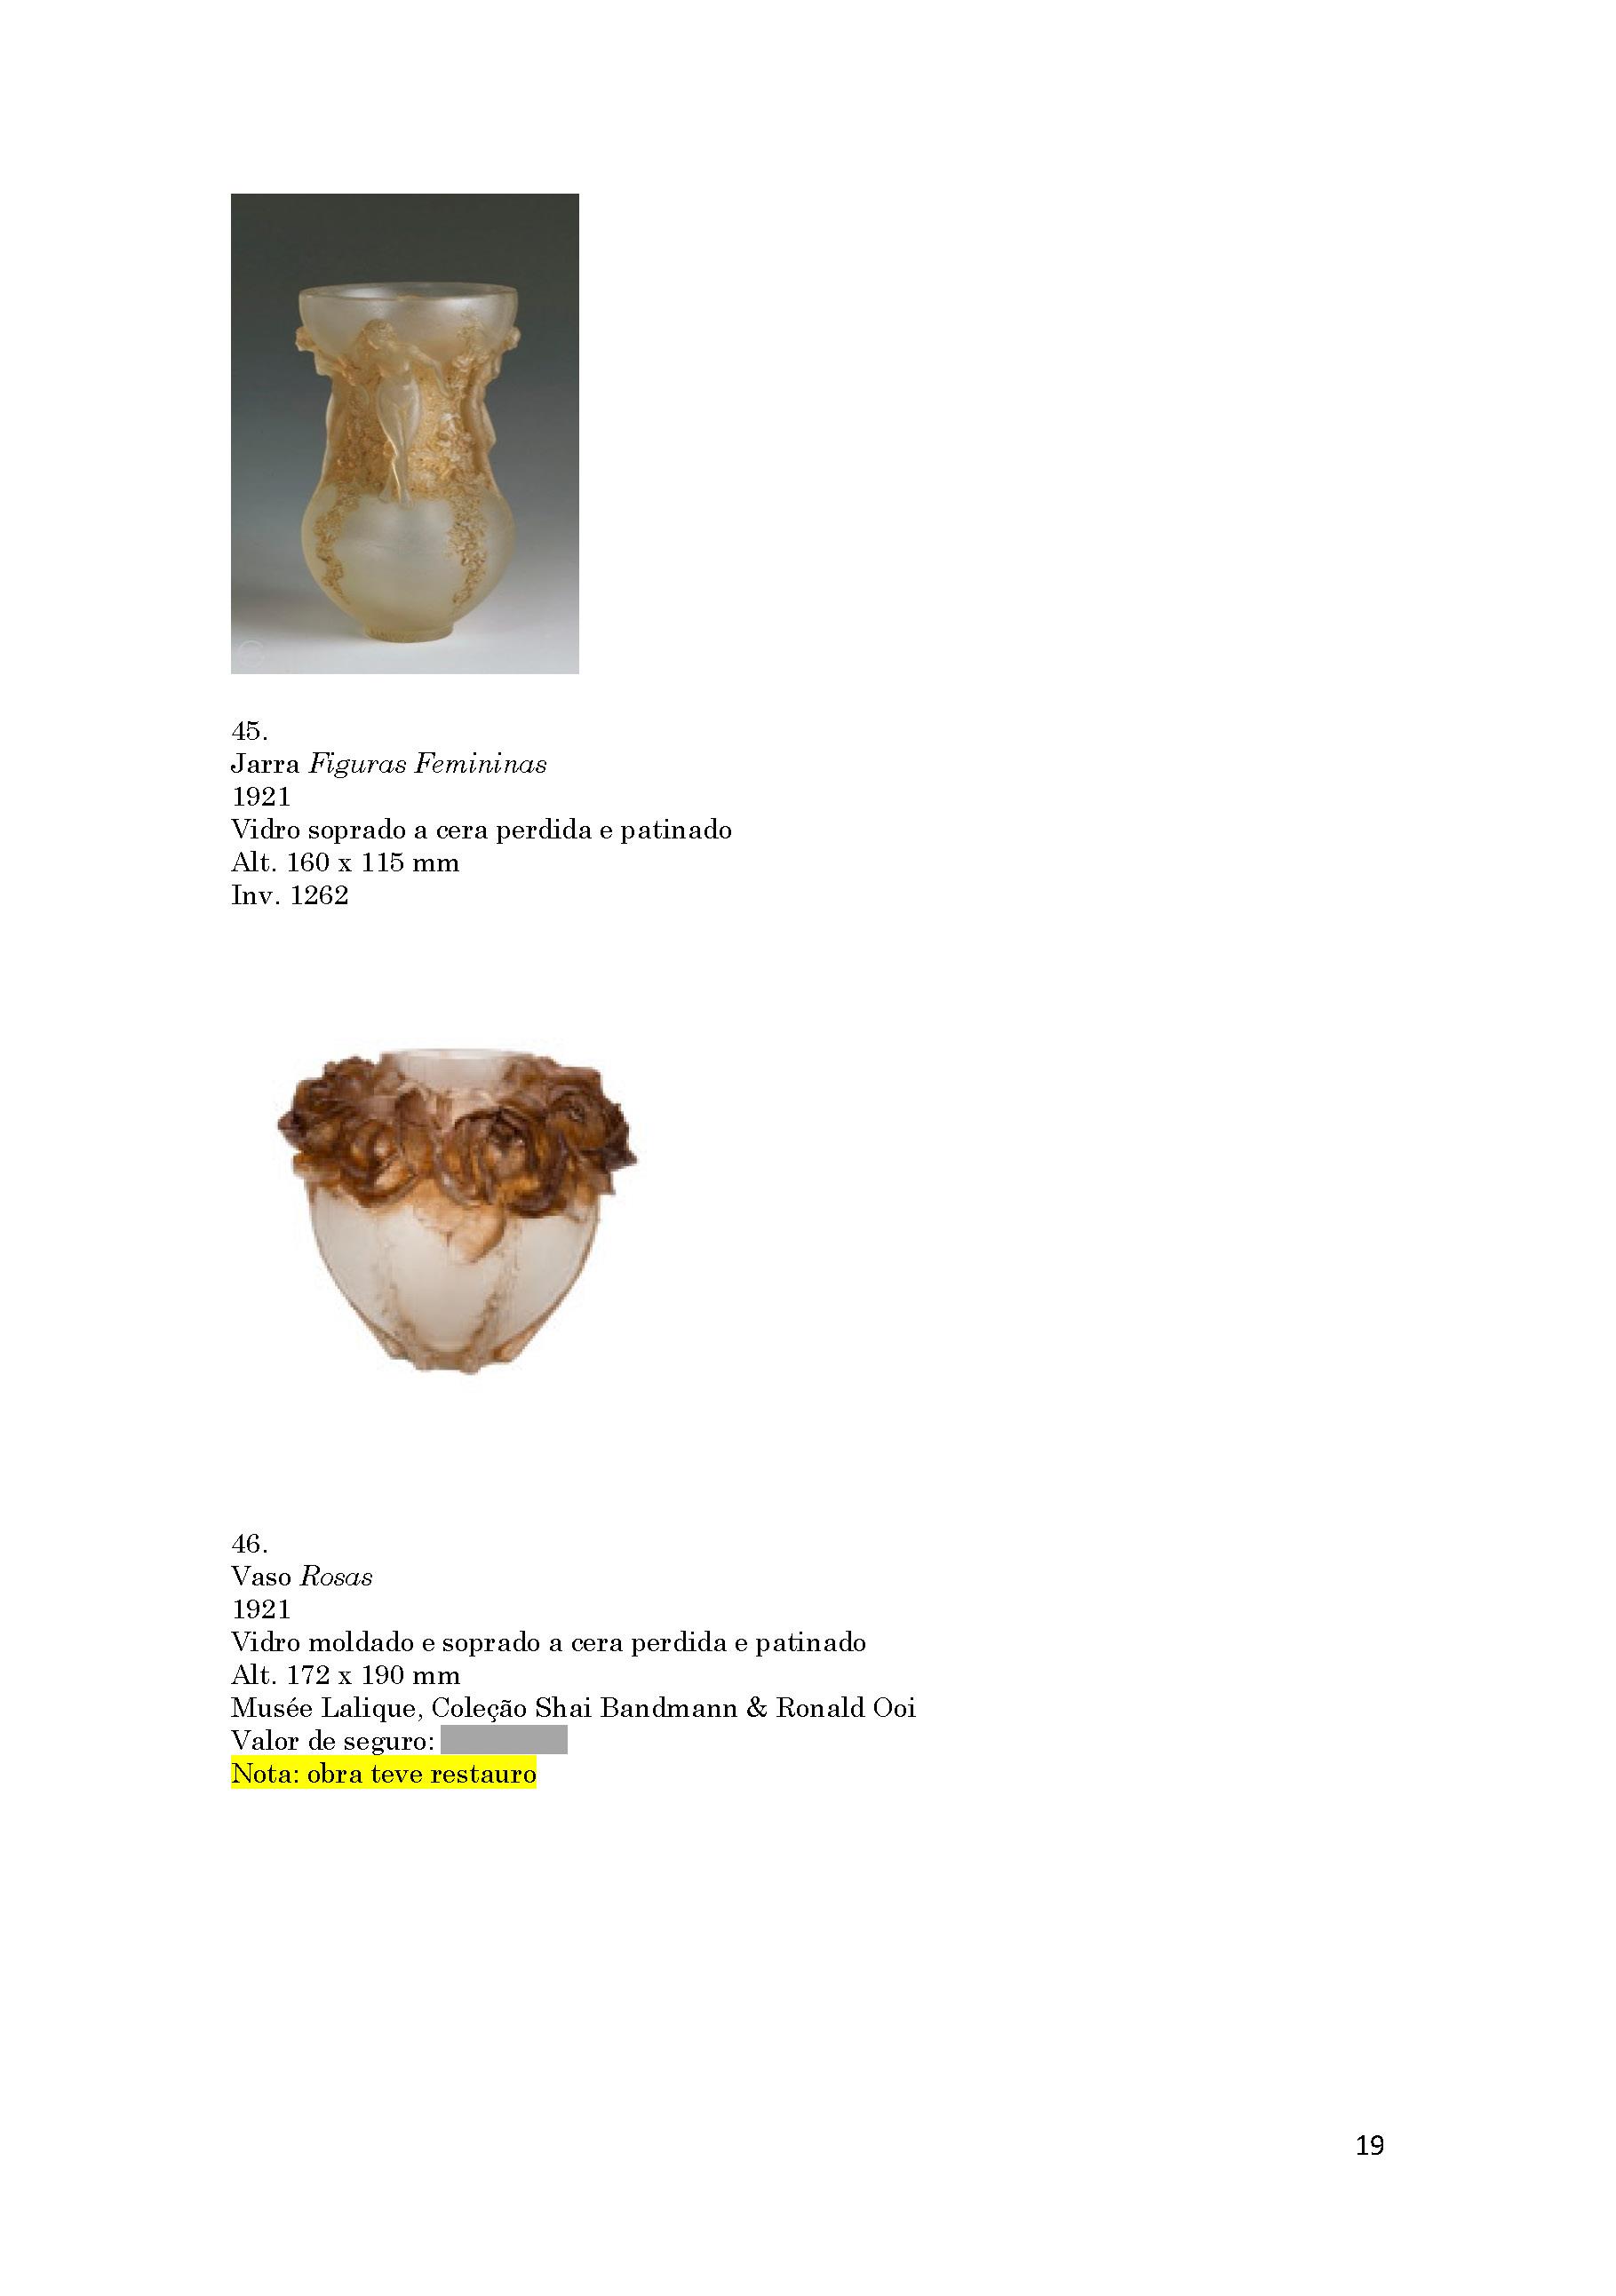 Lista_Vidros_Lalique_25.09.2020_1.19